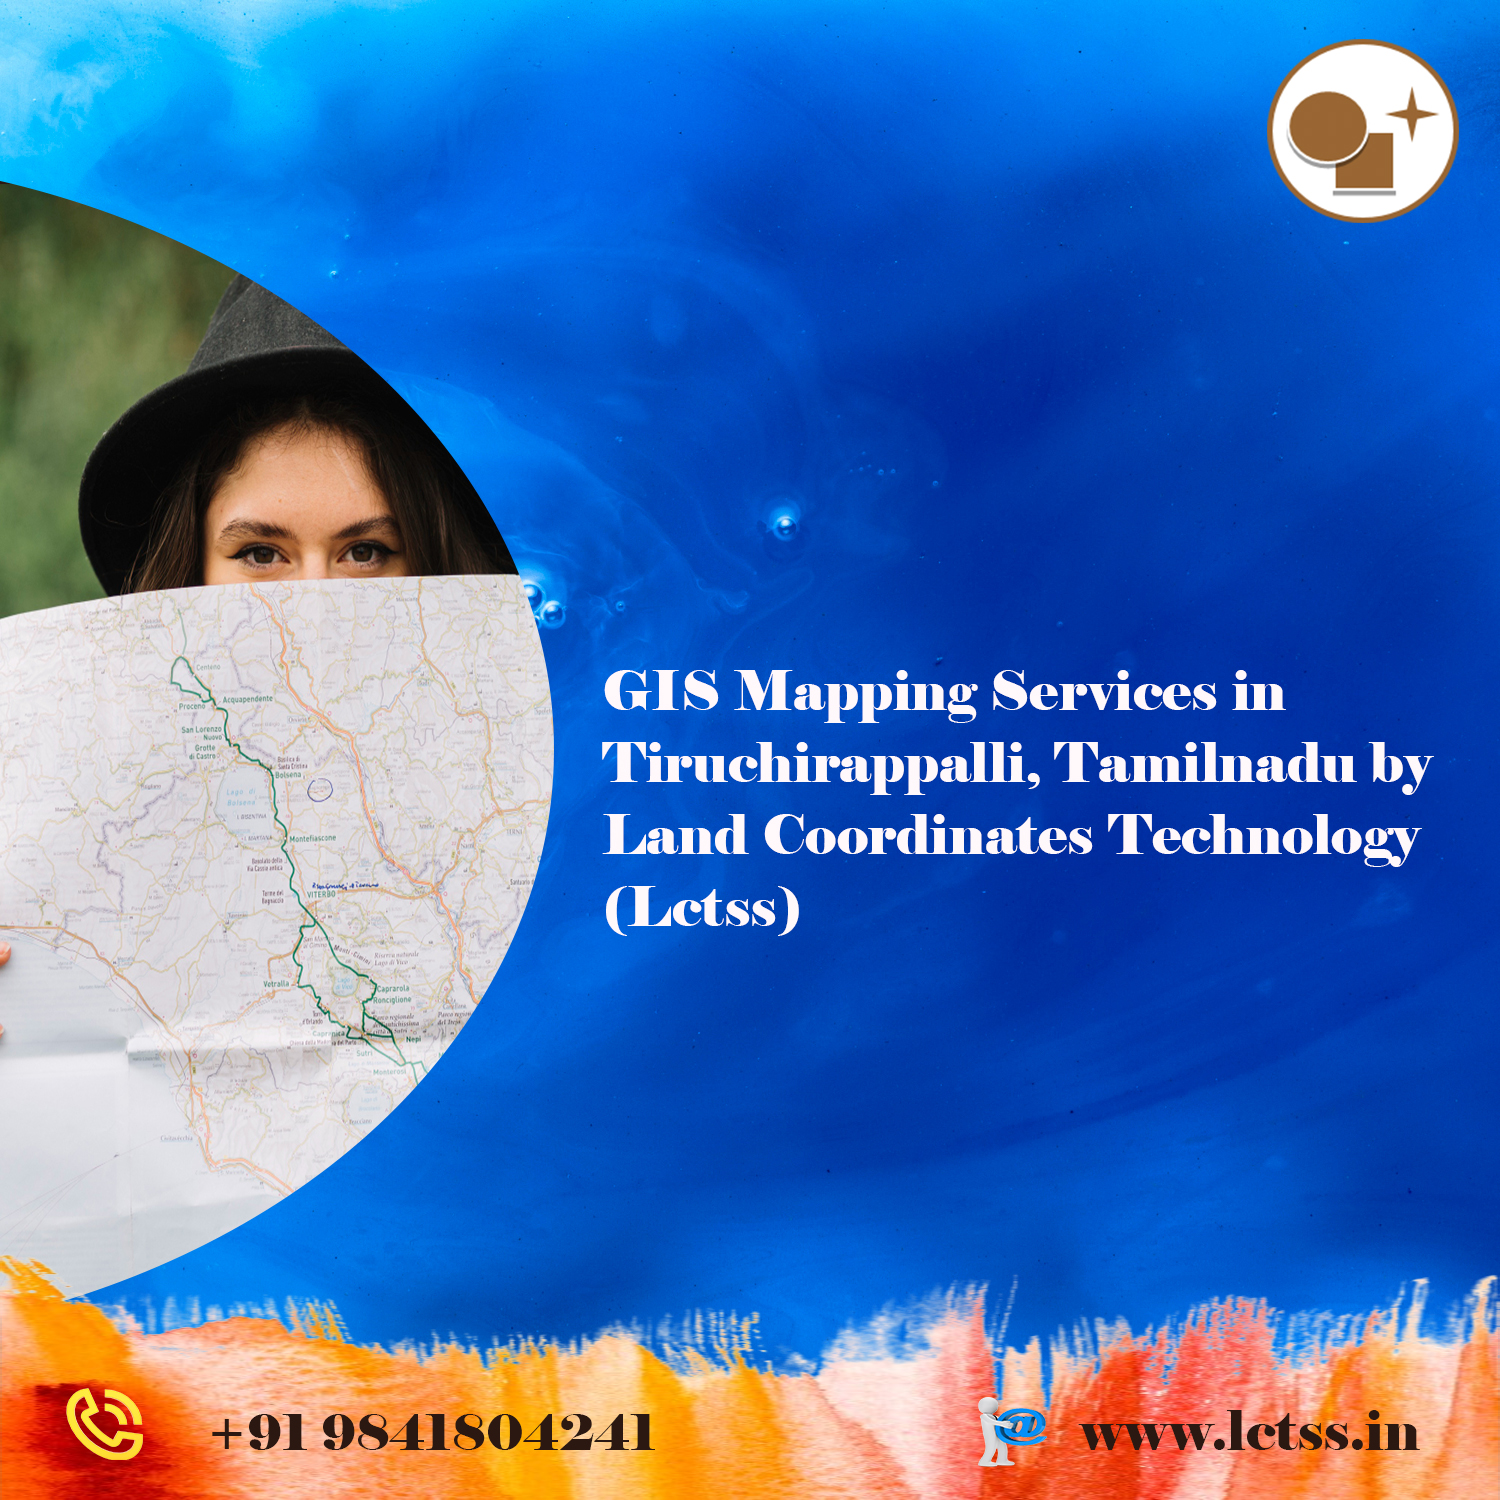 GIS Mapping Services in Tiruchirappalli, Tamilnadu by Land Coordinates Technology (Lctss)